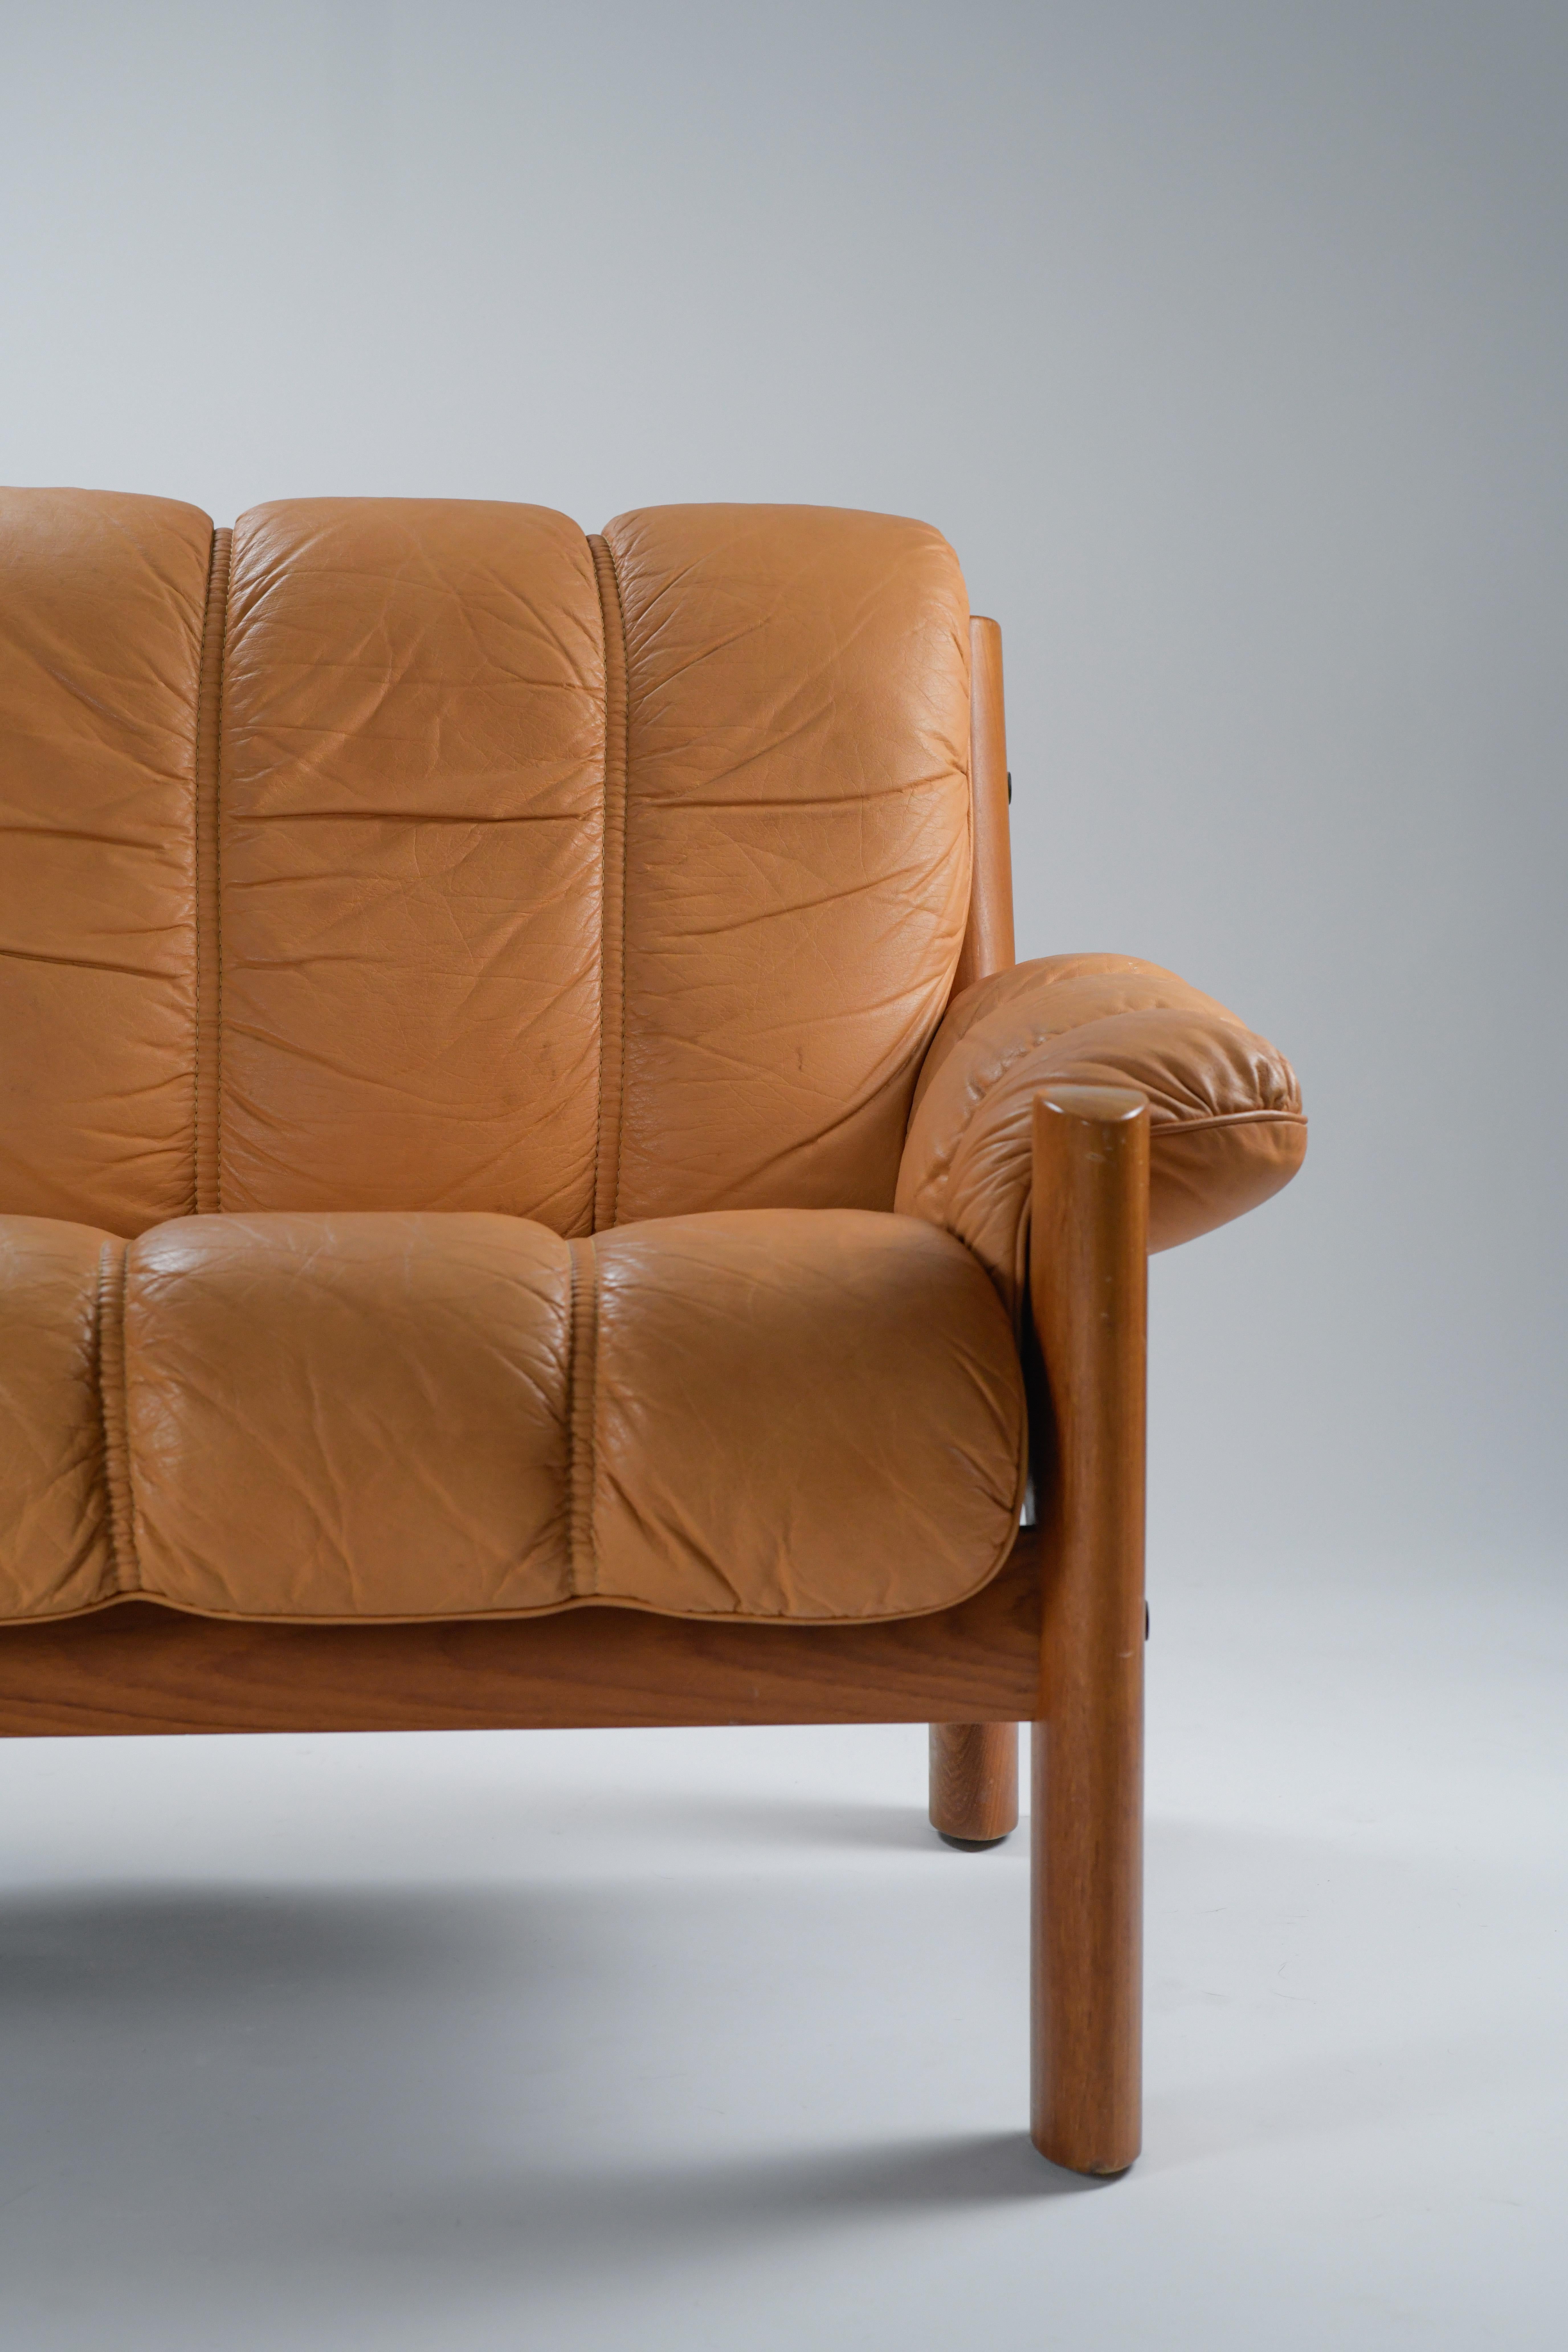 Mid-Century Modern 1970s Orange Leather Loveseat Sofa by Ekornes  For Sale